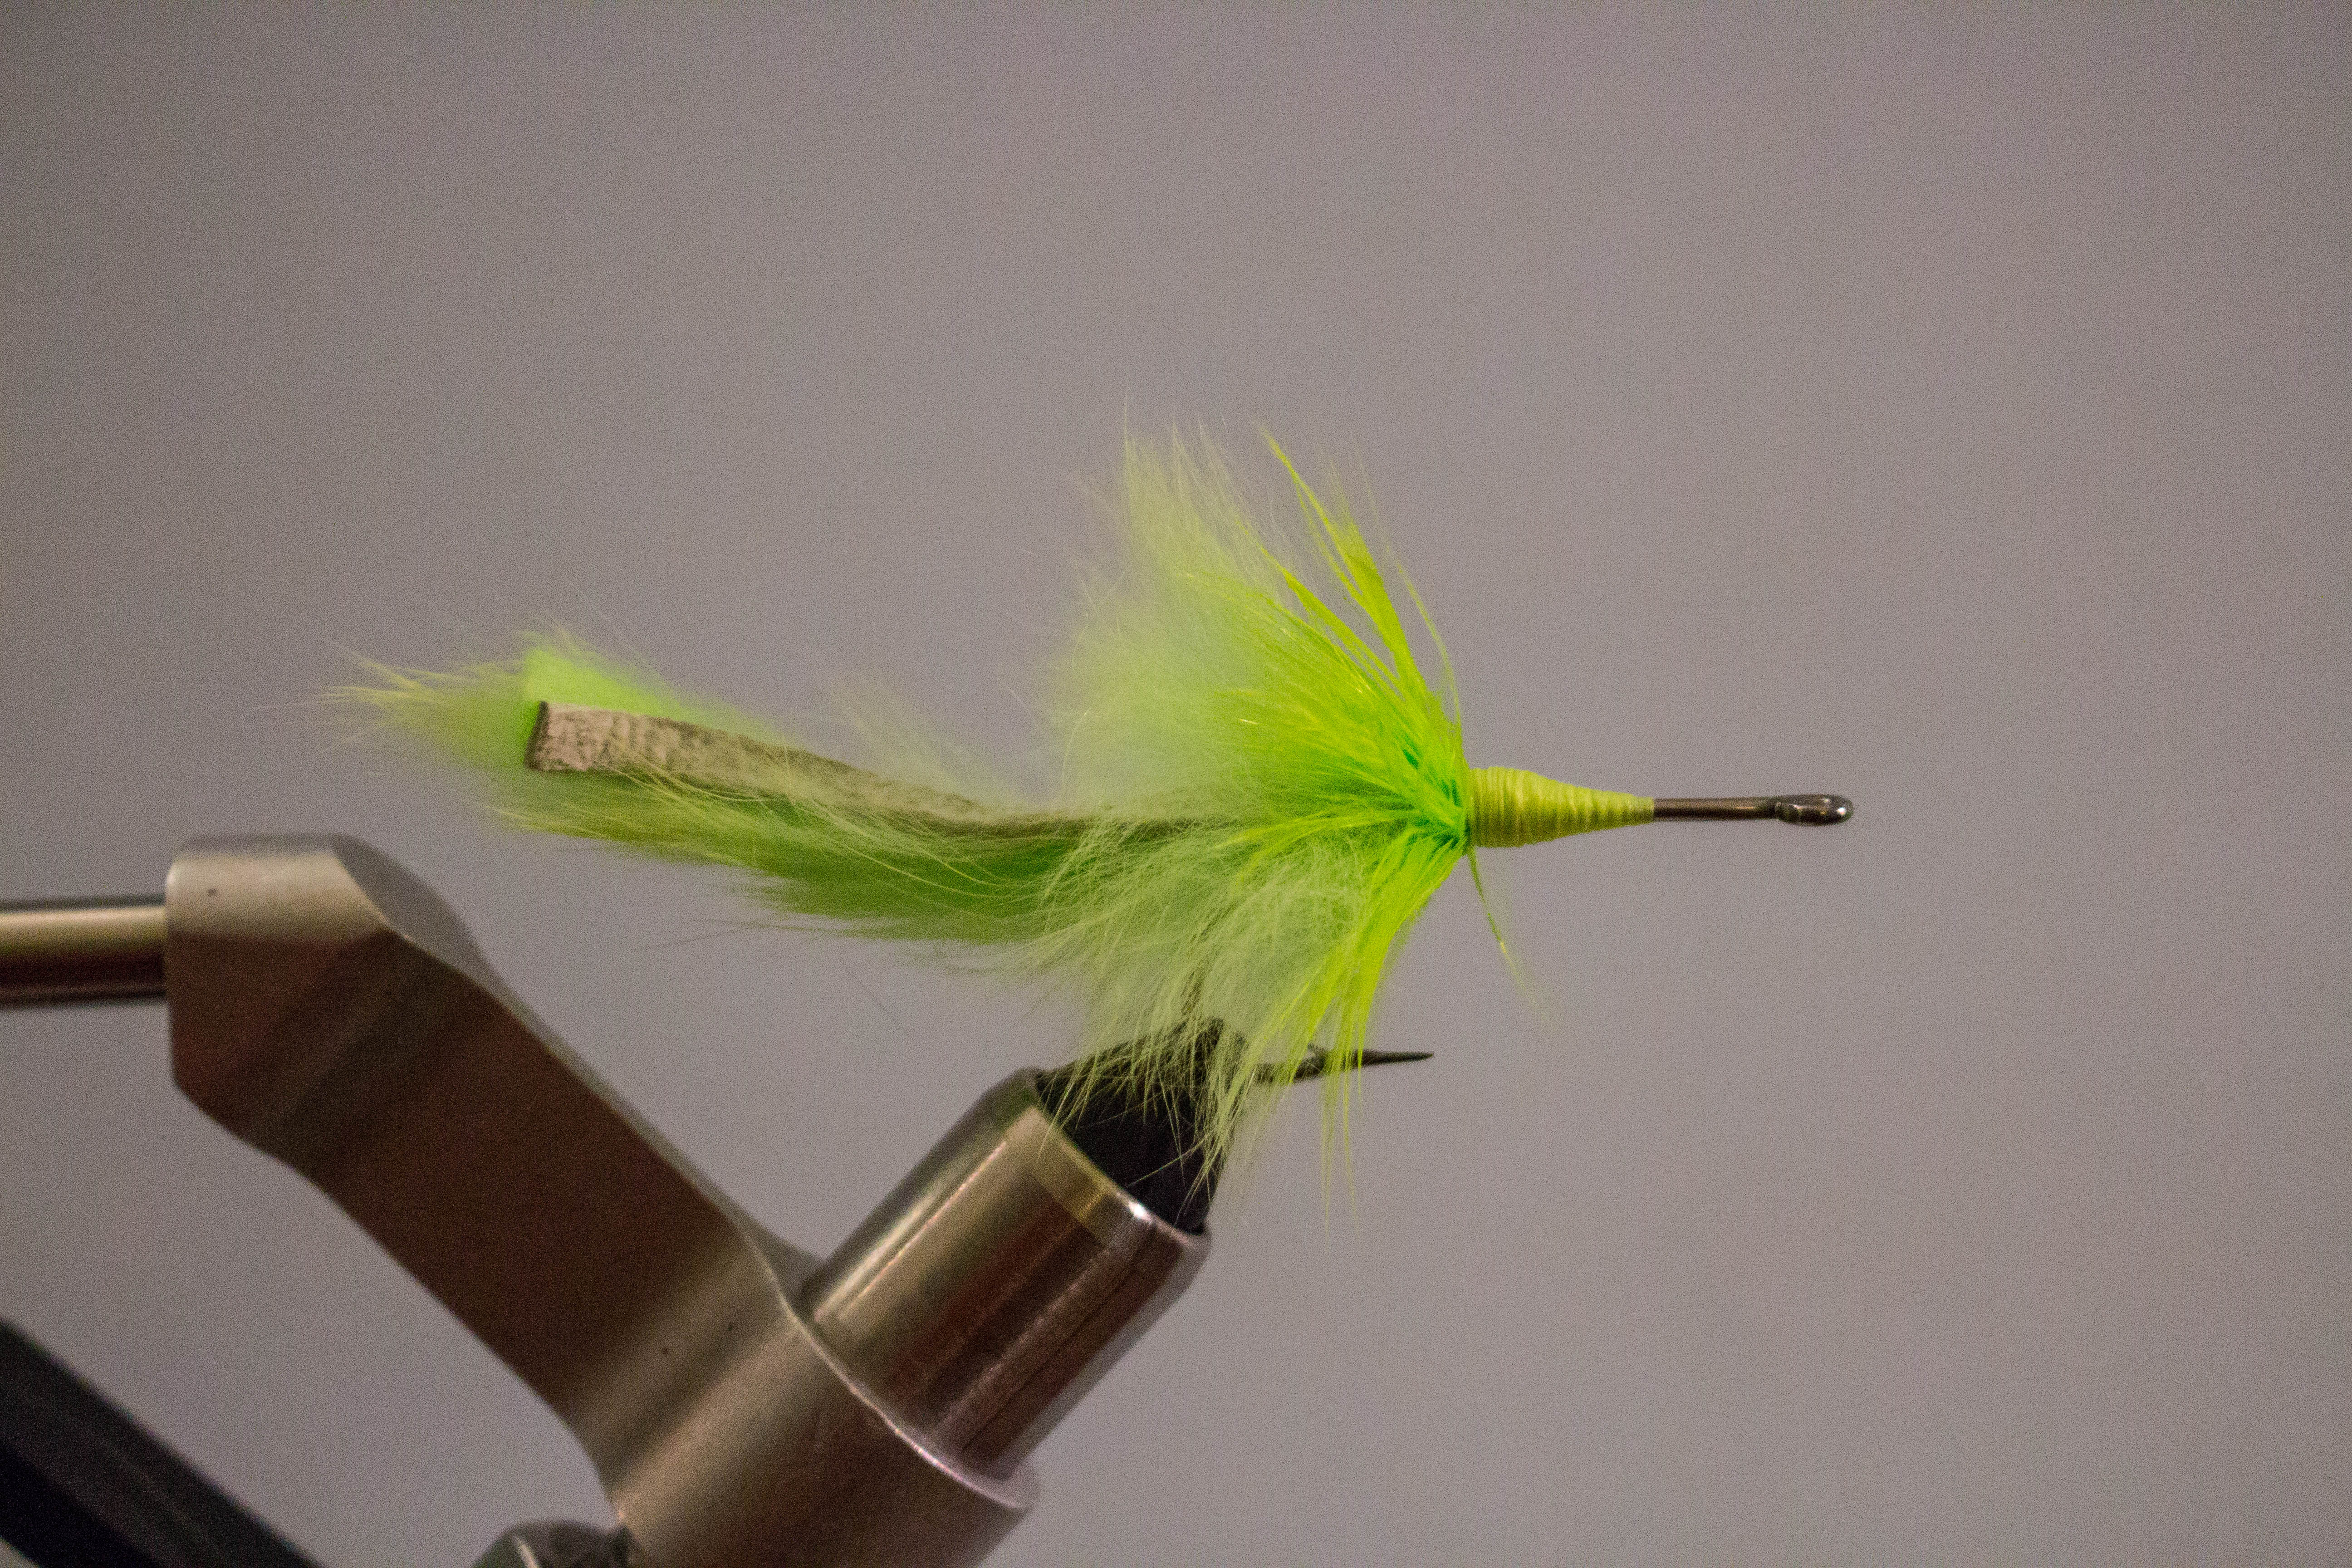 FLY FISHING FLIES - Chartreuse TARPON FLY size 3/0 (3 pcs.)